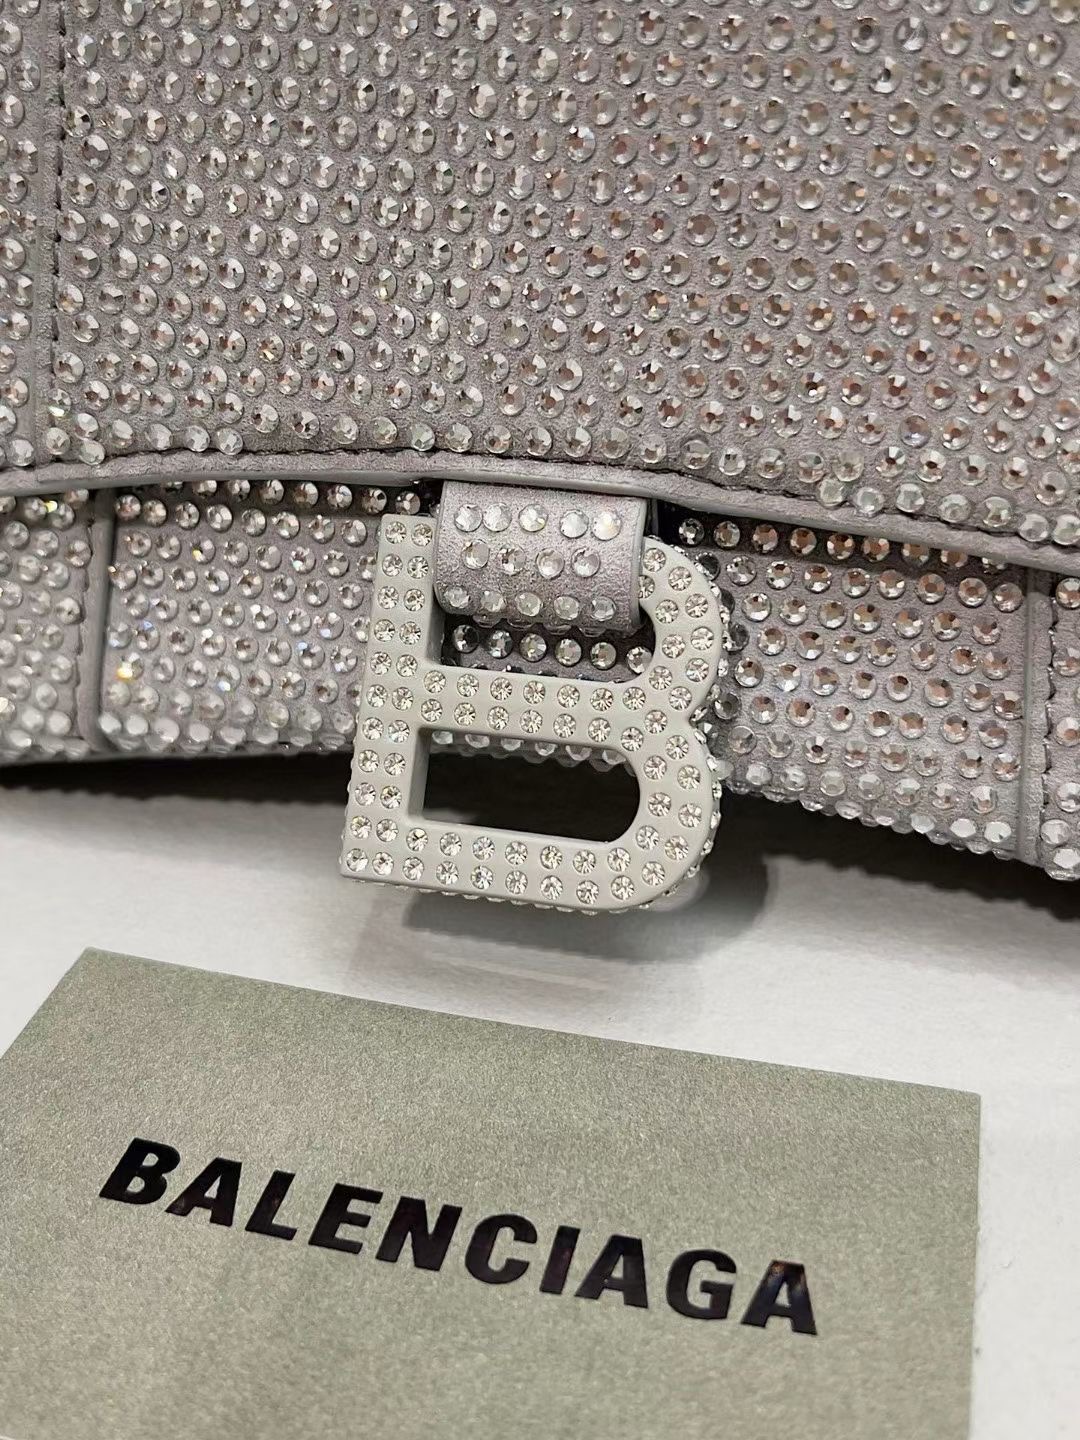 Balenciaga WOMENS HOURGLASS XS HANDBAG WITH RHINESTONES 283328 IN silver